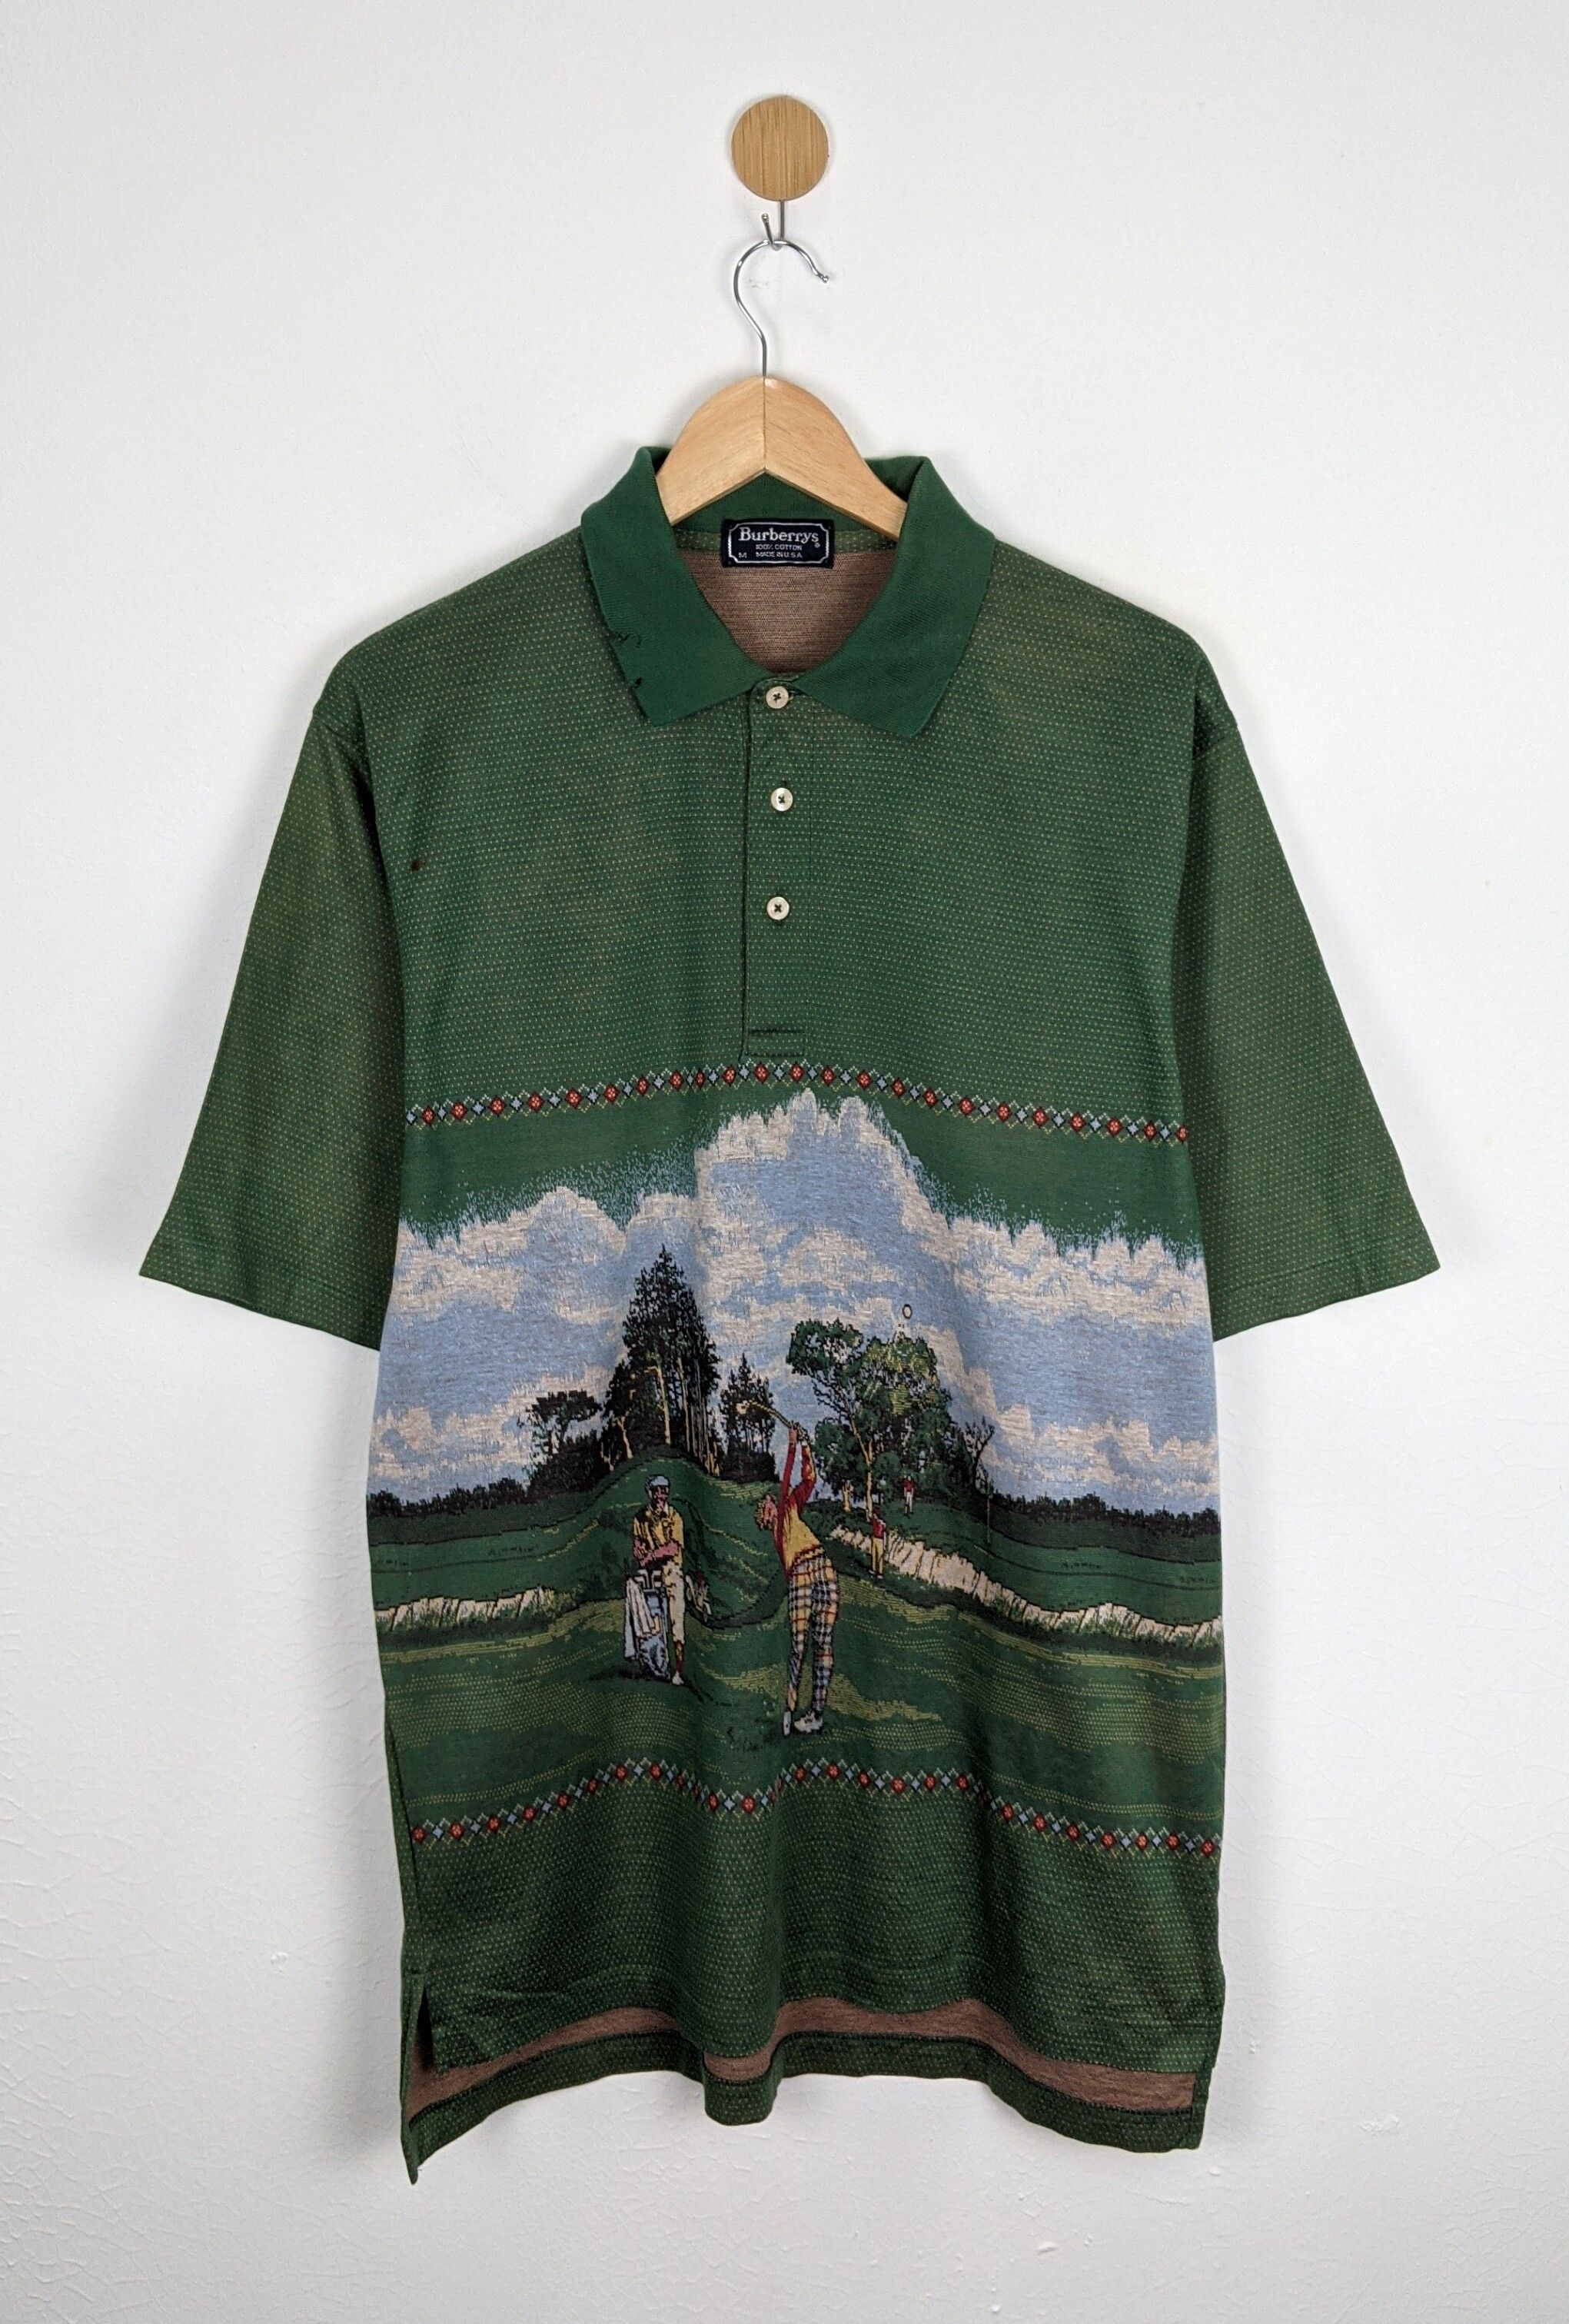 Vintage Burberrys Golf print polo shirt 80s 90s - 1